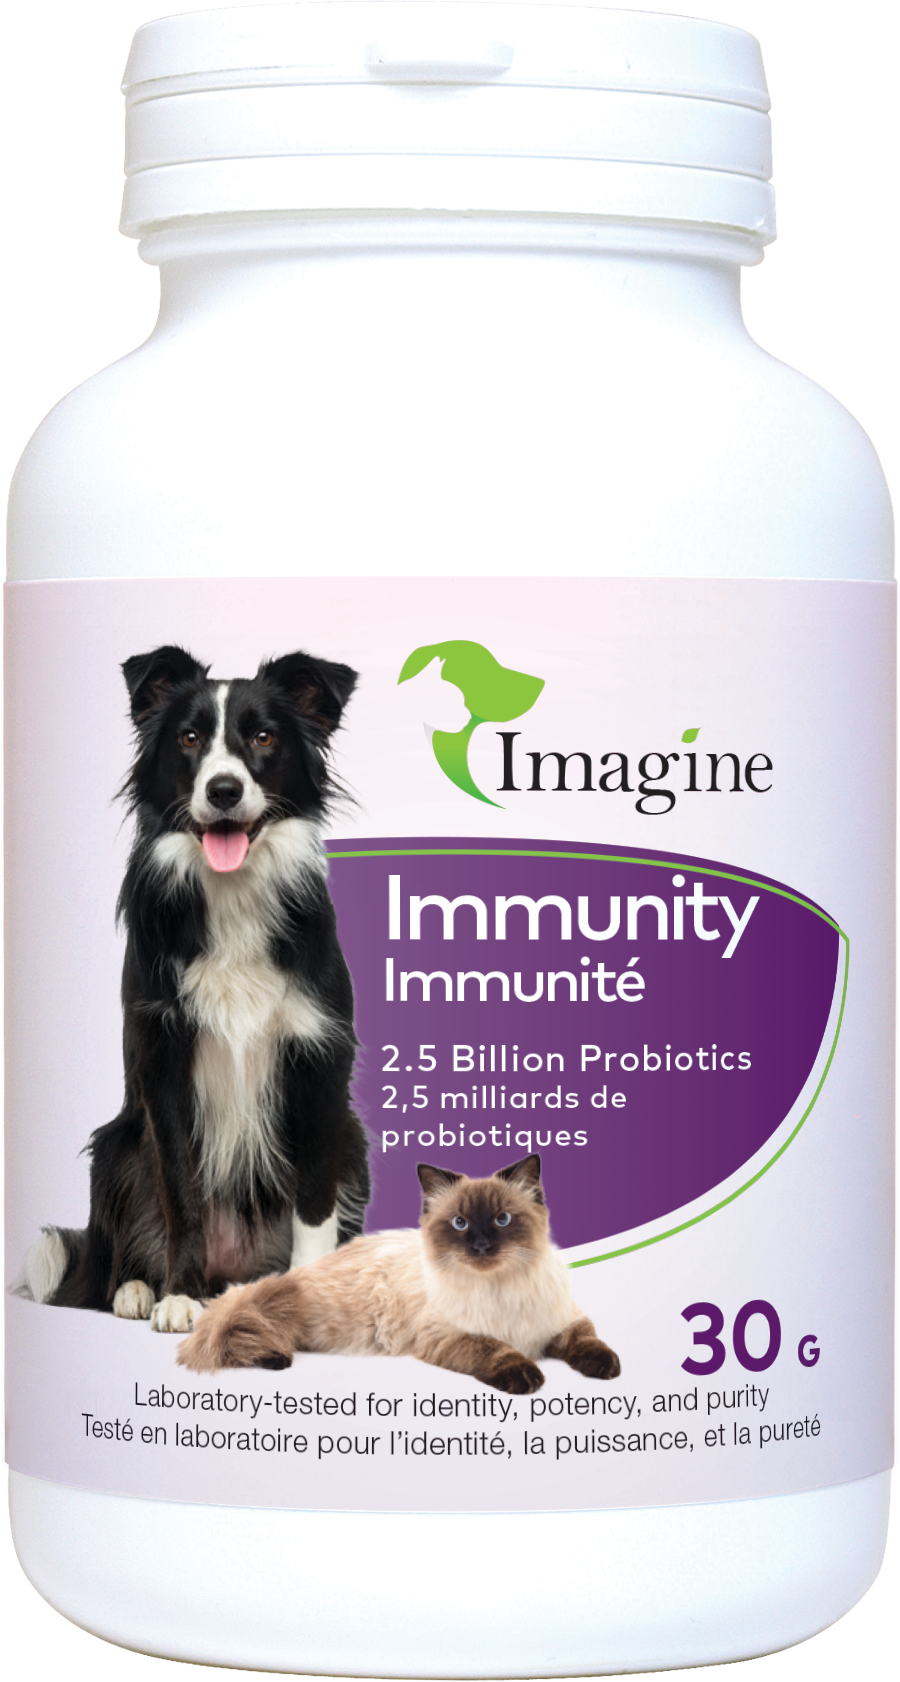 Immunity/ imagine pet products